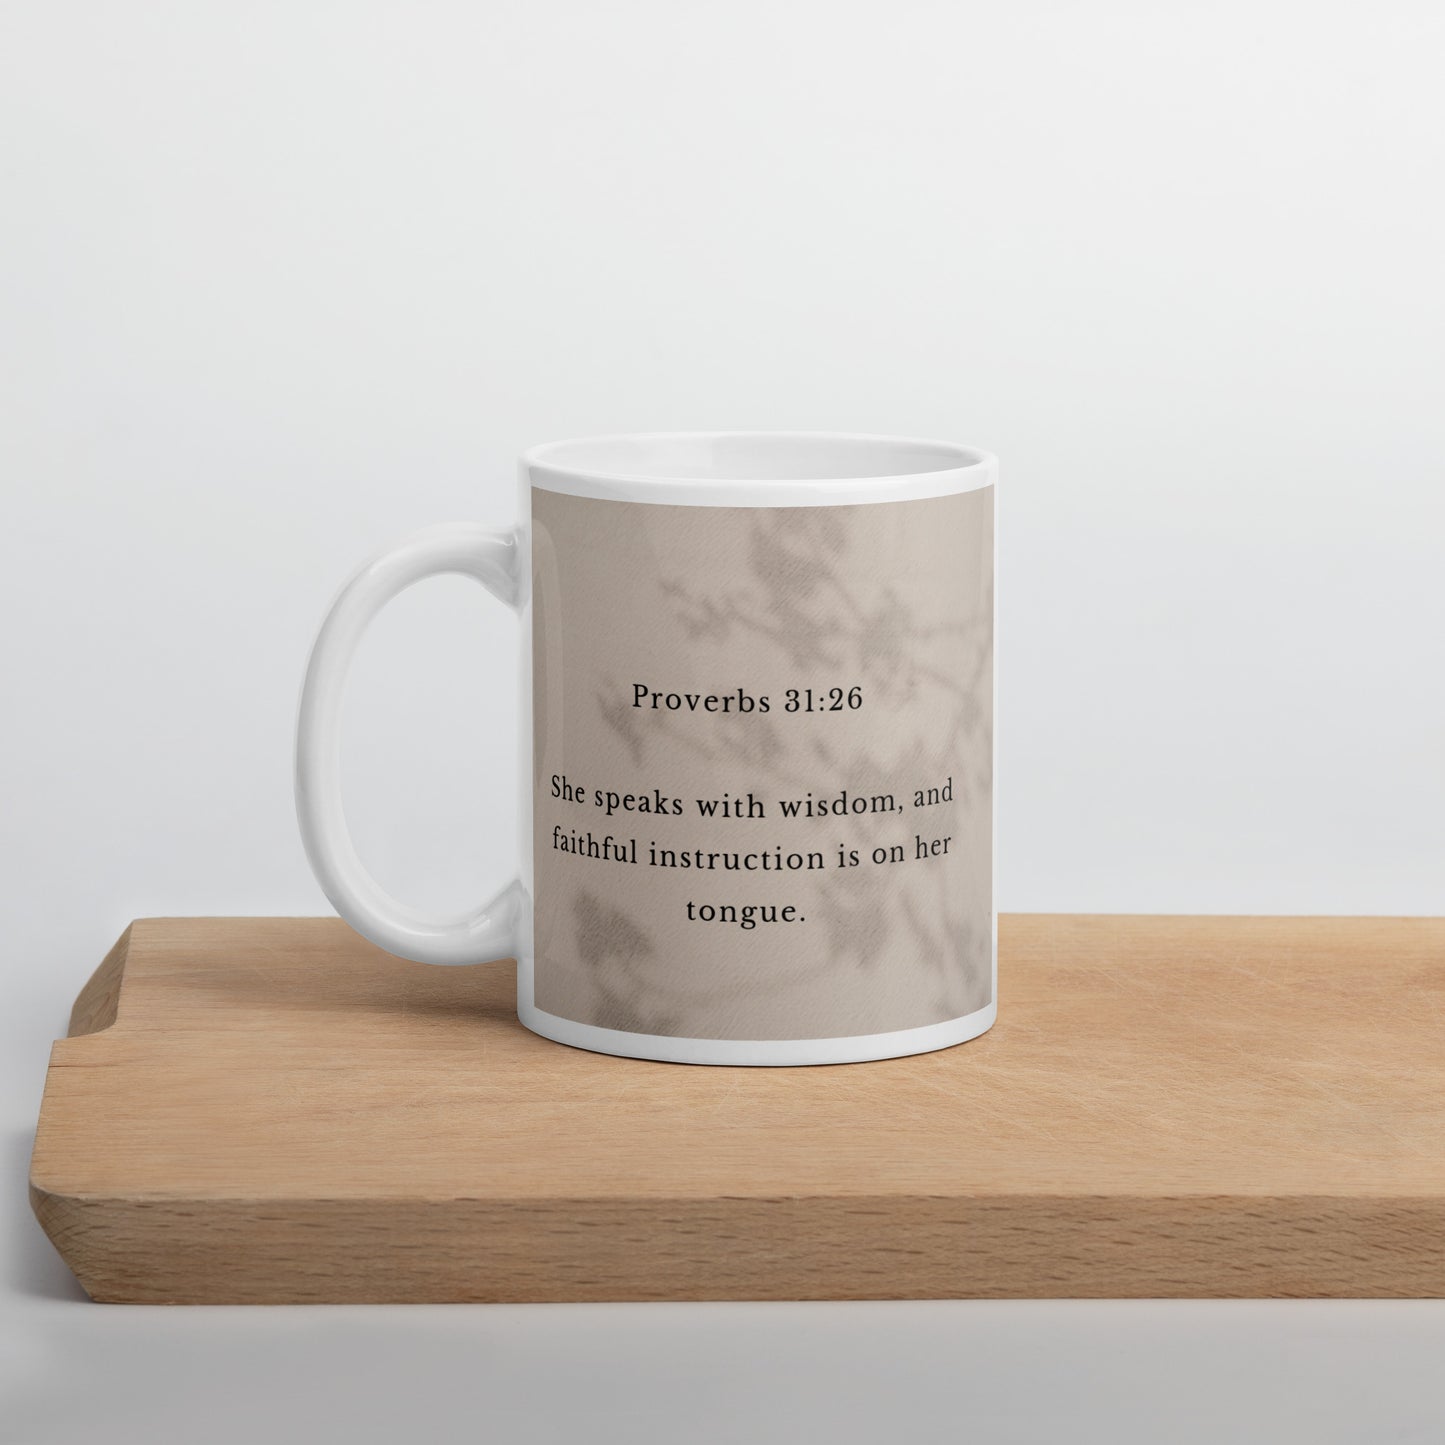 Proverbs 31:26 White glossy mug